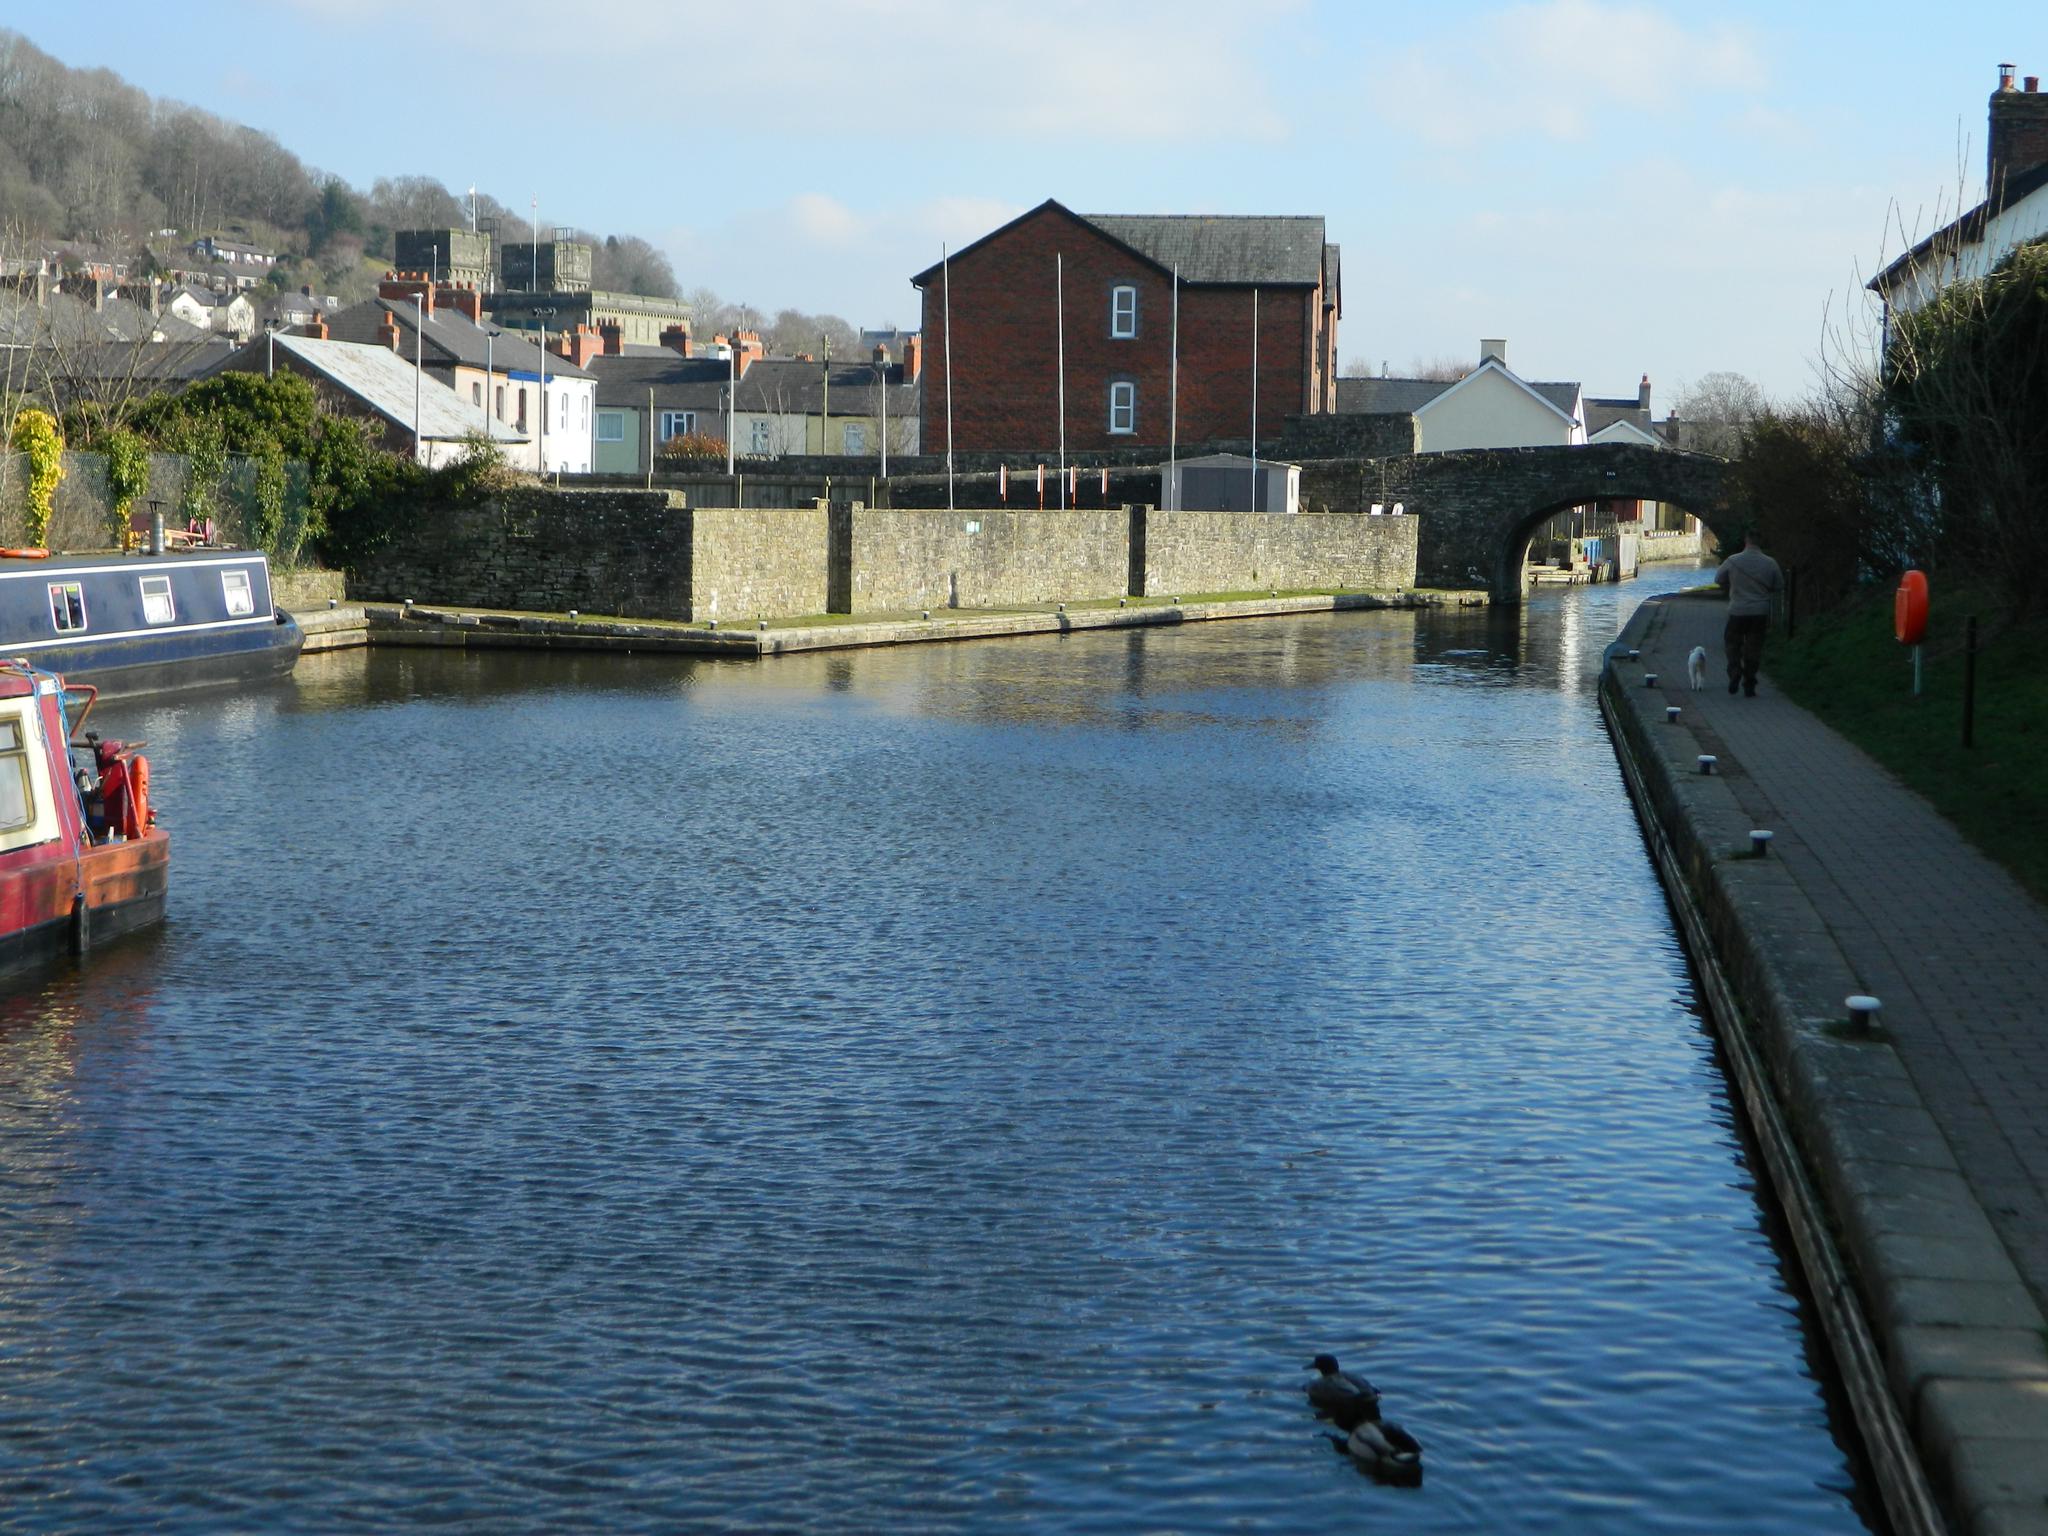 Brecknock & Abergavenny Canal, photograph